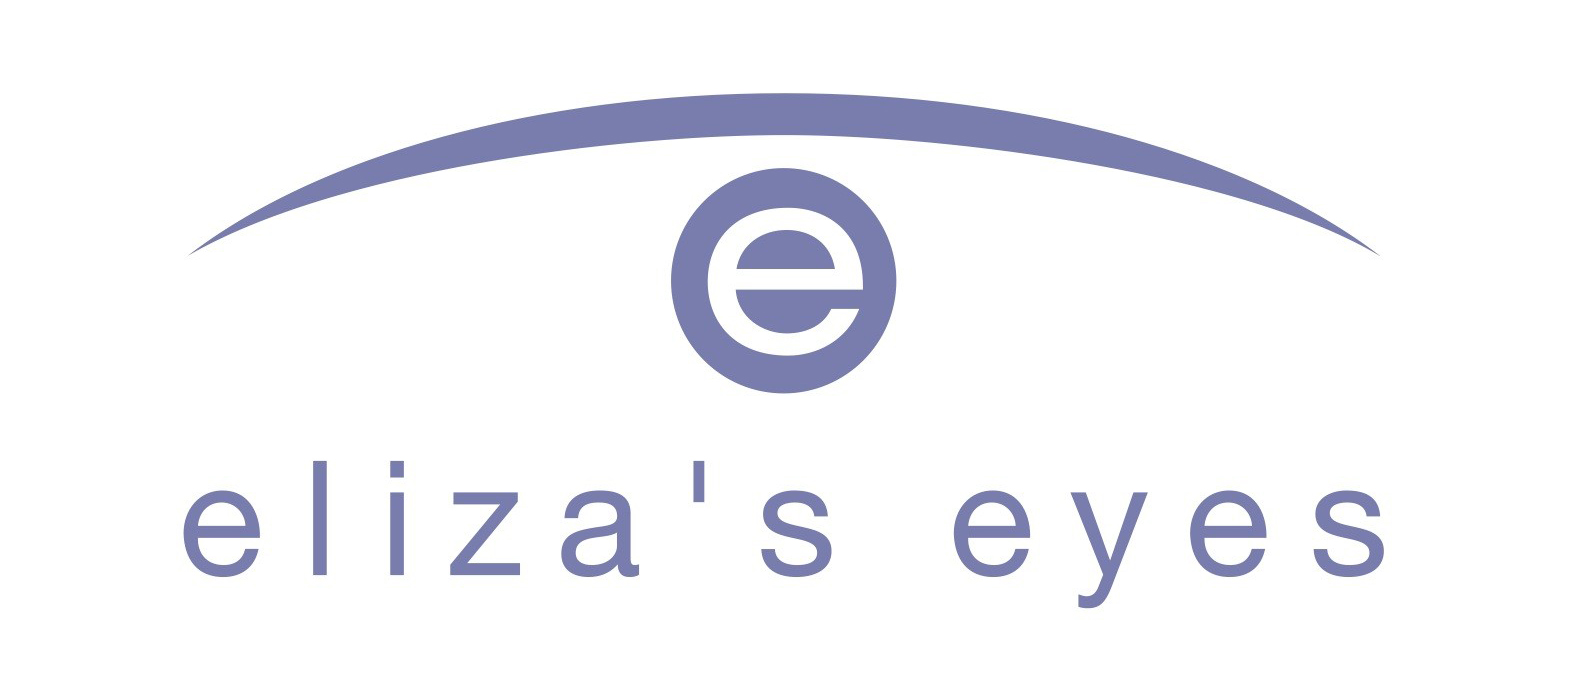 eliza's eyes logo